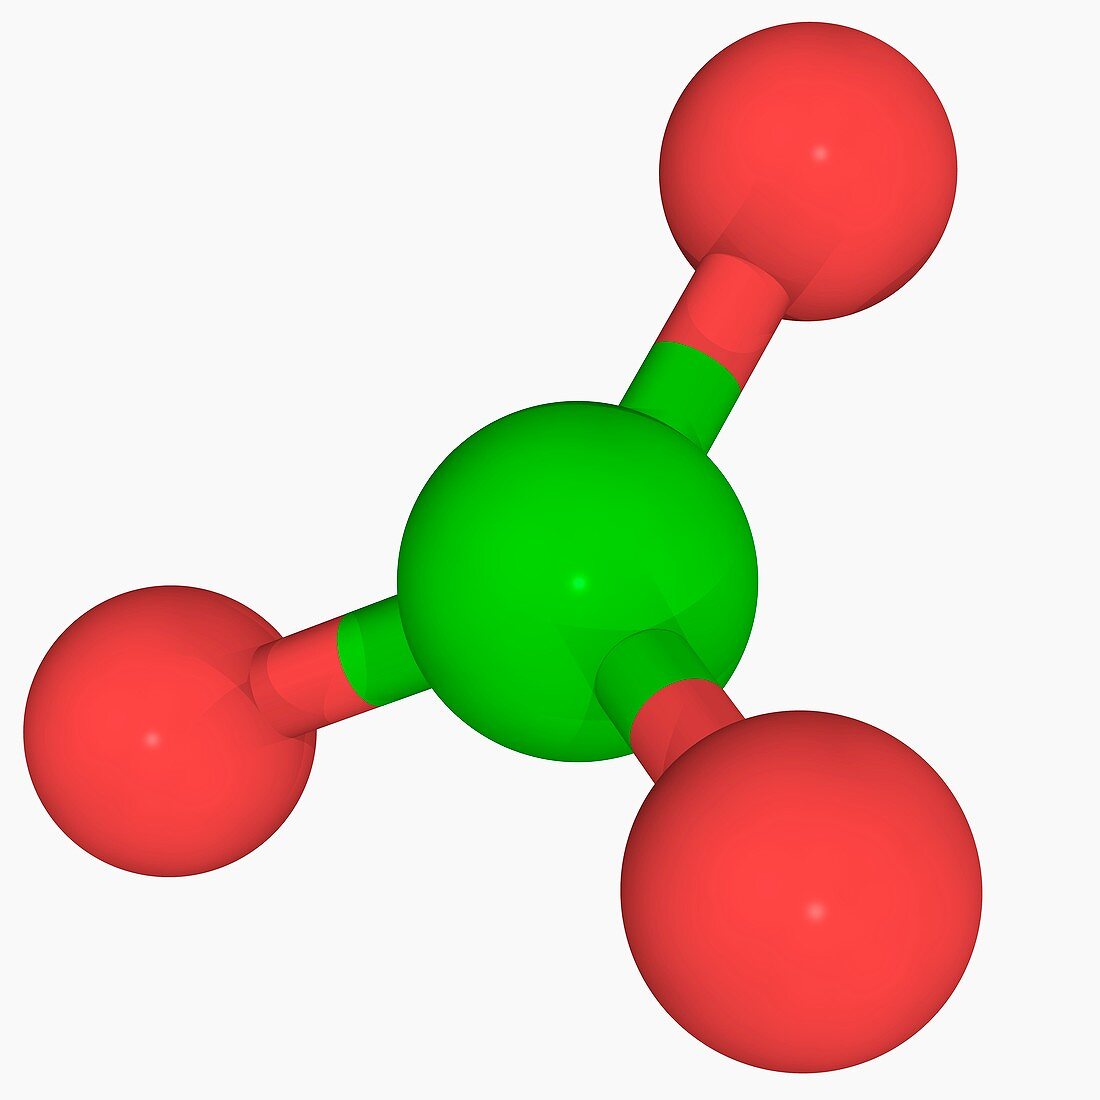 Chlorate ion molecule